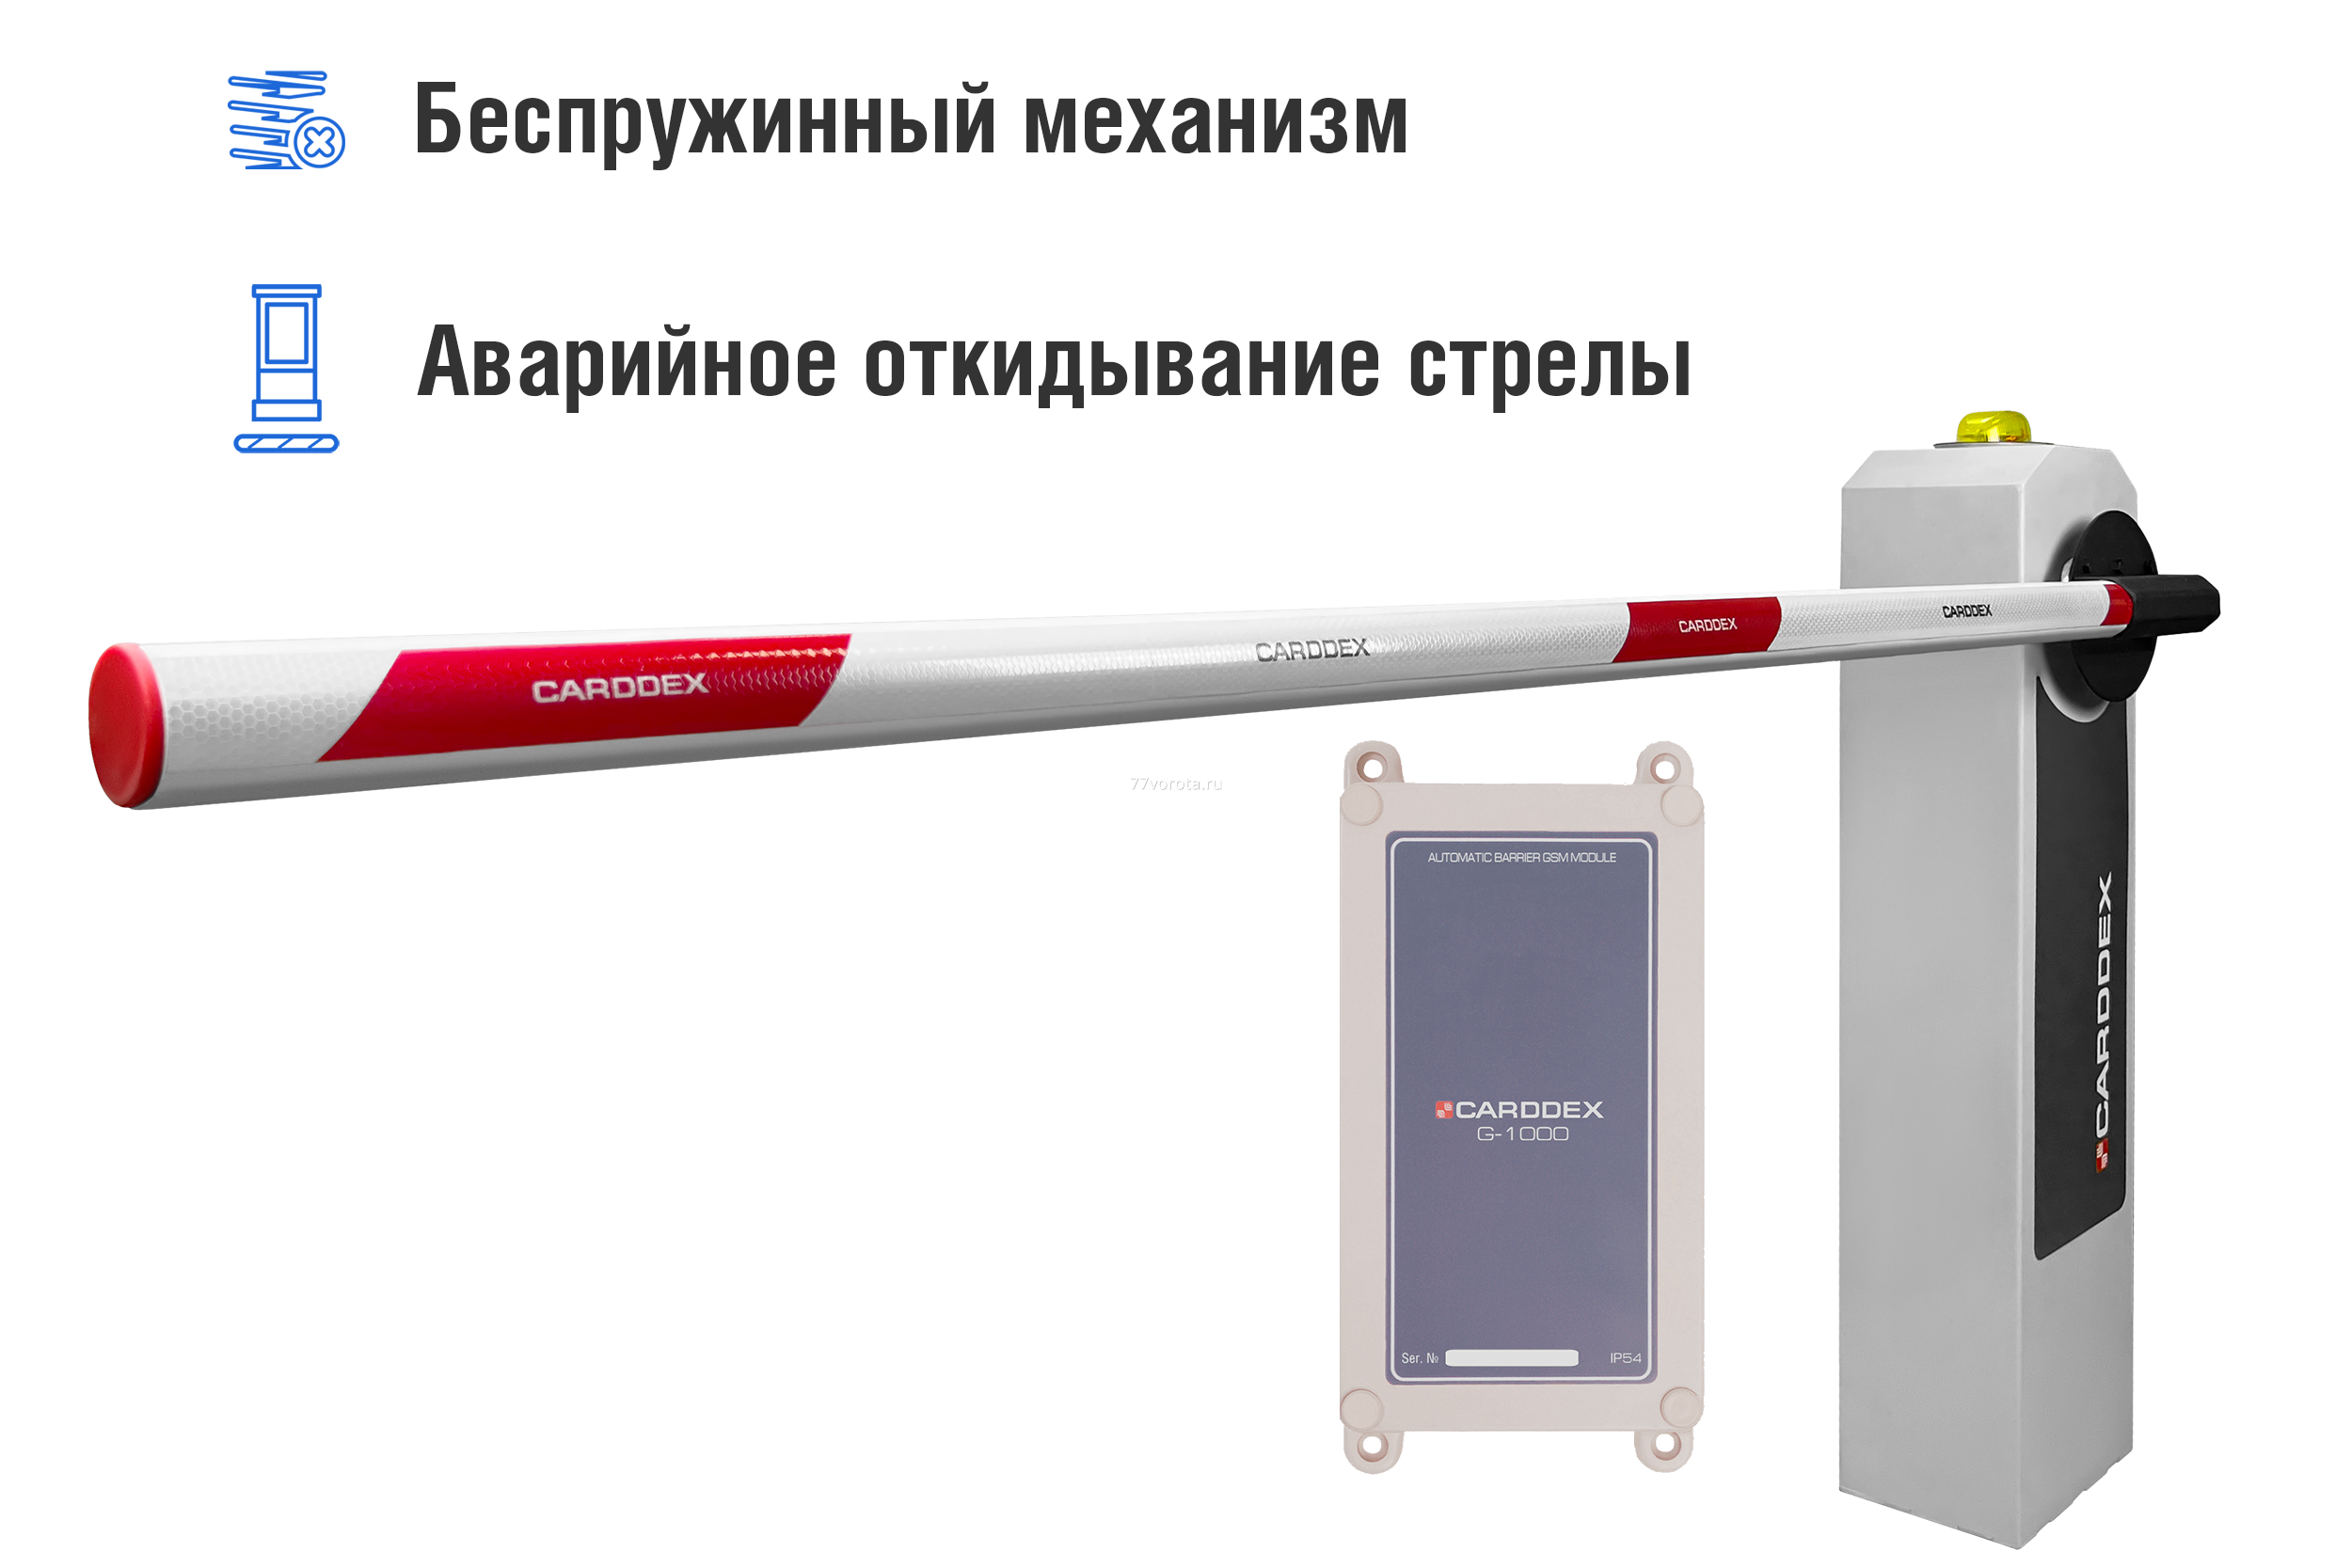 Автоматический шлагбаум CARDDEX «RBM-L», комплект  «Стандарт плюс GSM-L» - фото 1